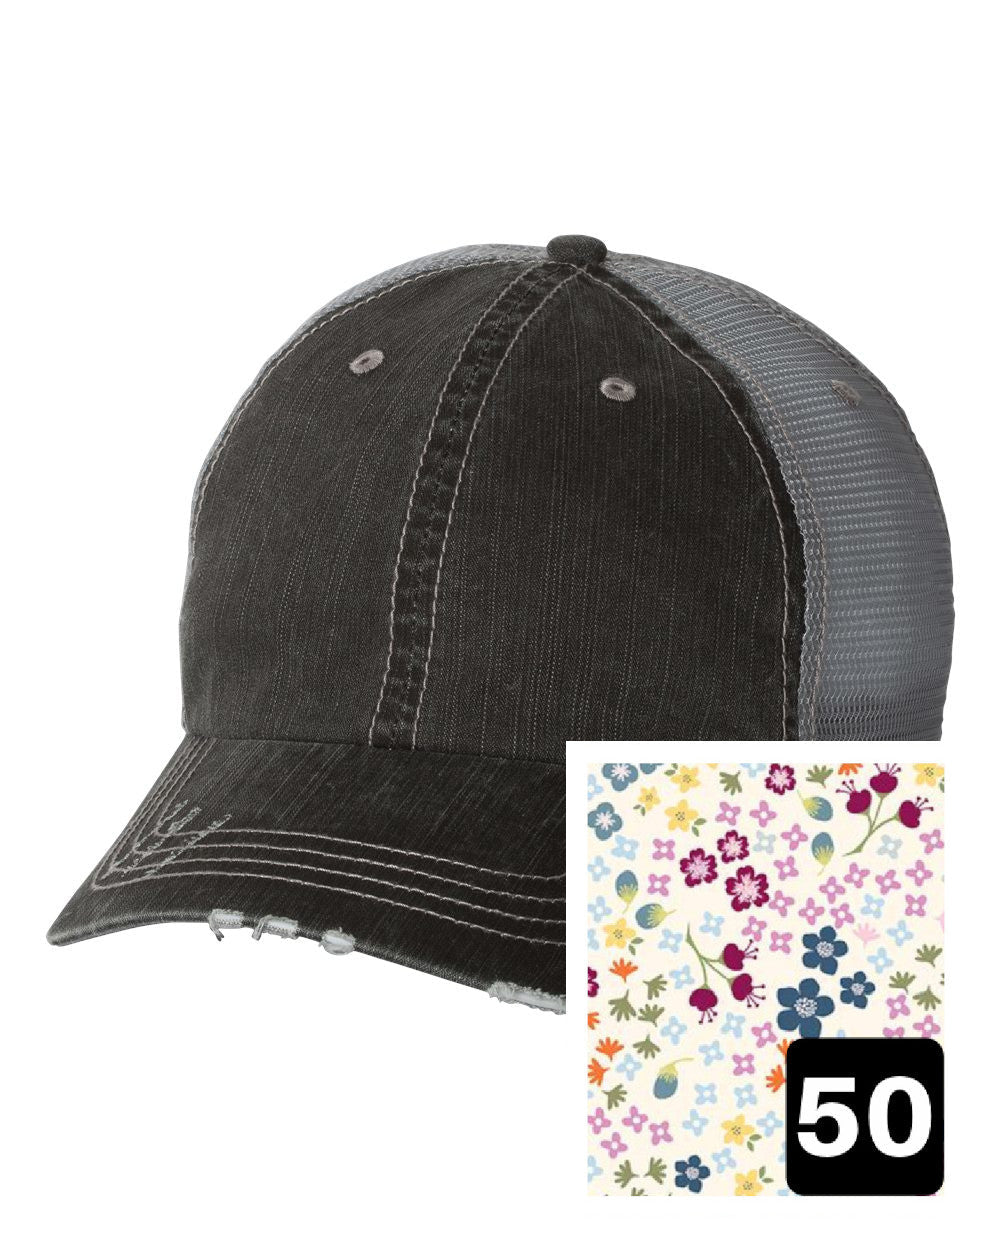 gray distressed trucker hat with gray geometric fabric state of Nebraska